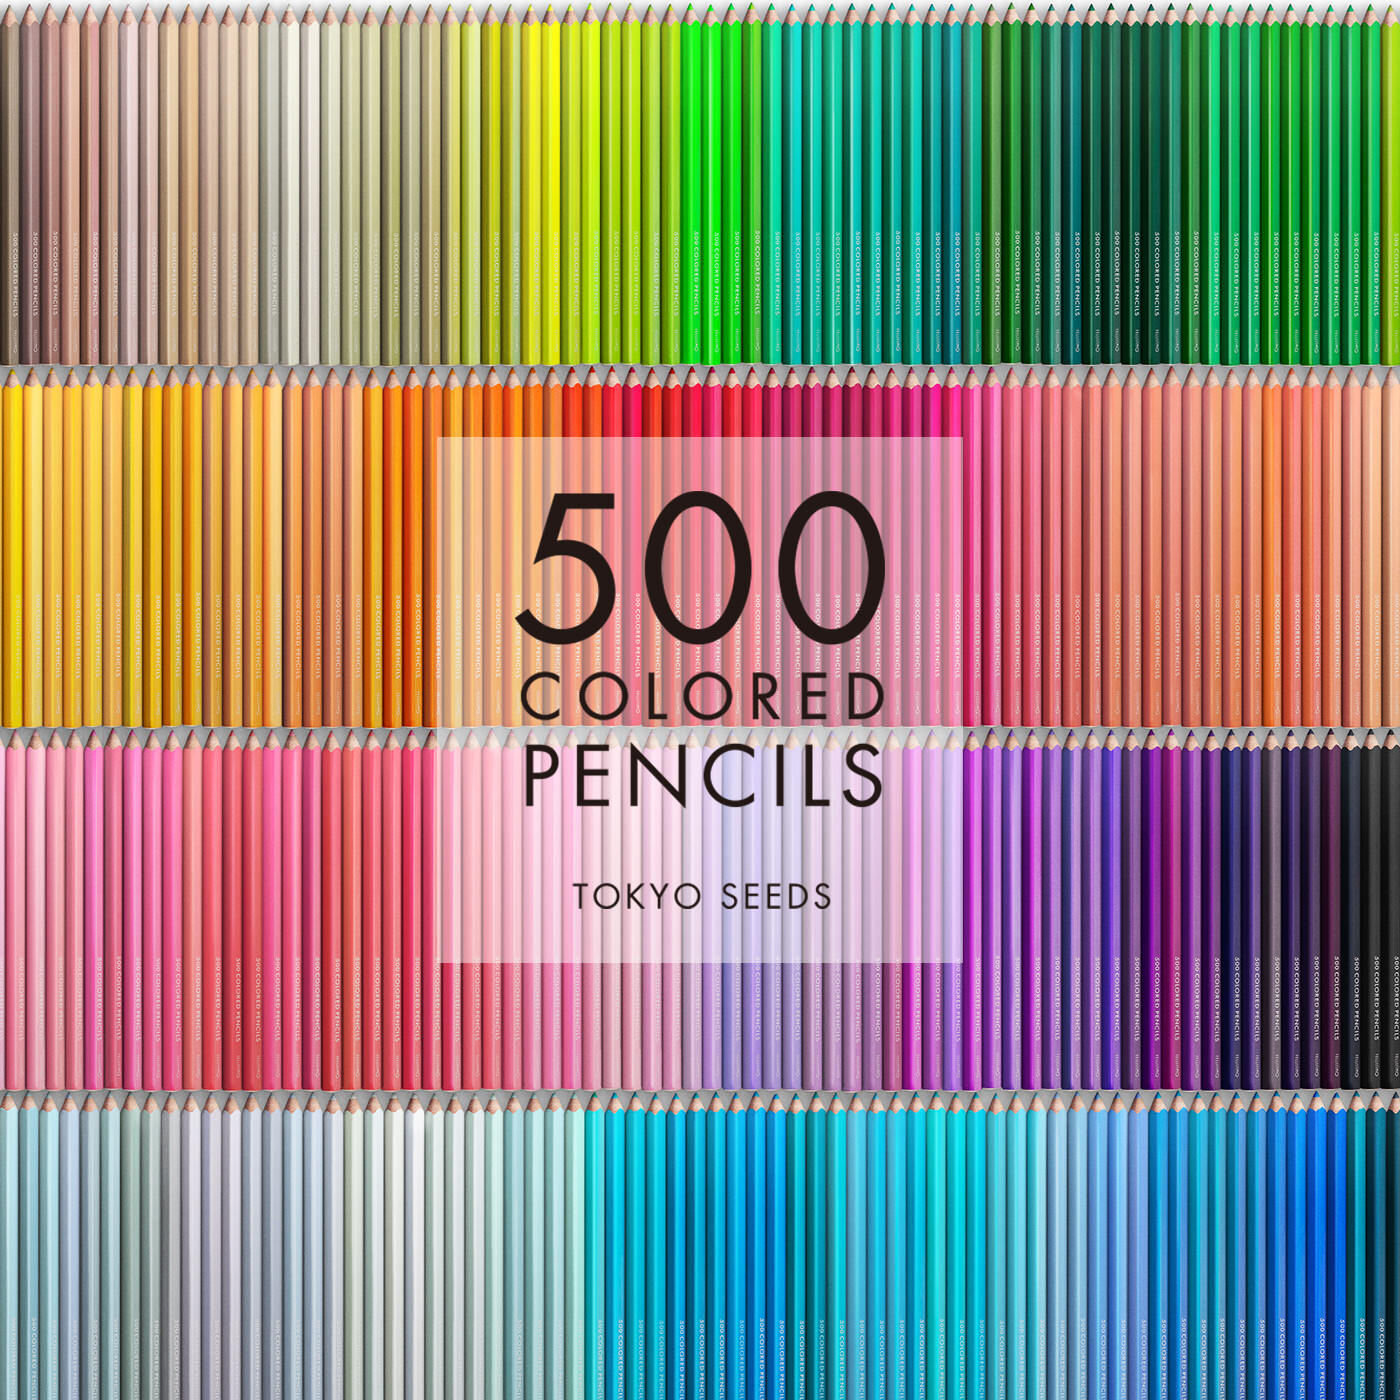 Real Stock|【250/500 HOLIDAY DREAMIN'】500色の色えんぴつ TOKYO SEEDS|1992年、世界初の「500色」という膨大な色数の色えんぴつが誕生して以来、その販売数は発売当初から合わせると、世界55ヵ国10万セット以上。今回、メイド・イン・ジャパンにこだわり、すべてが新しく生まれ変わって登場しました。